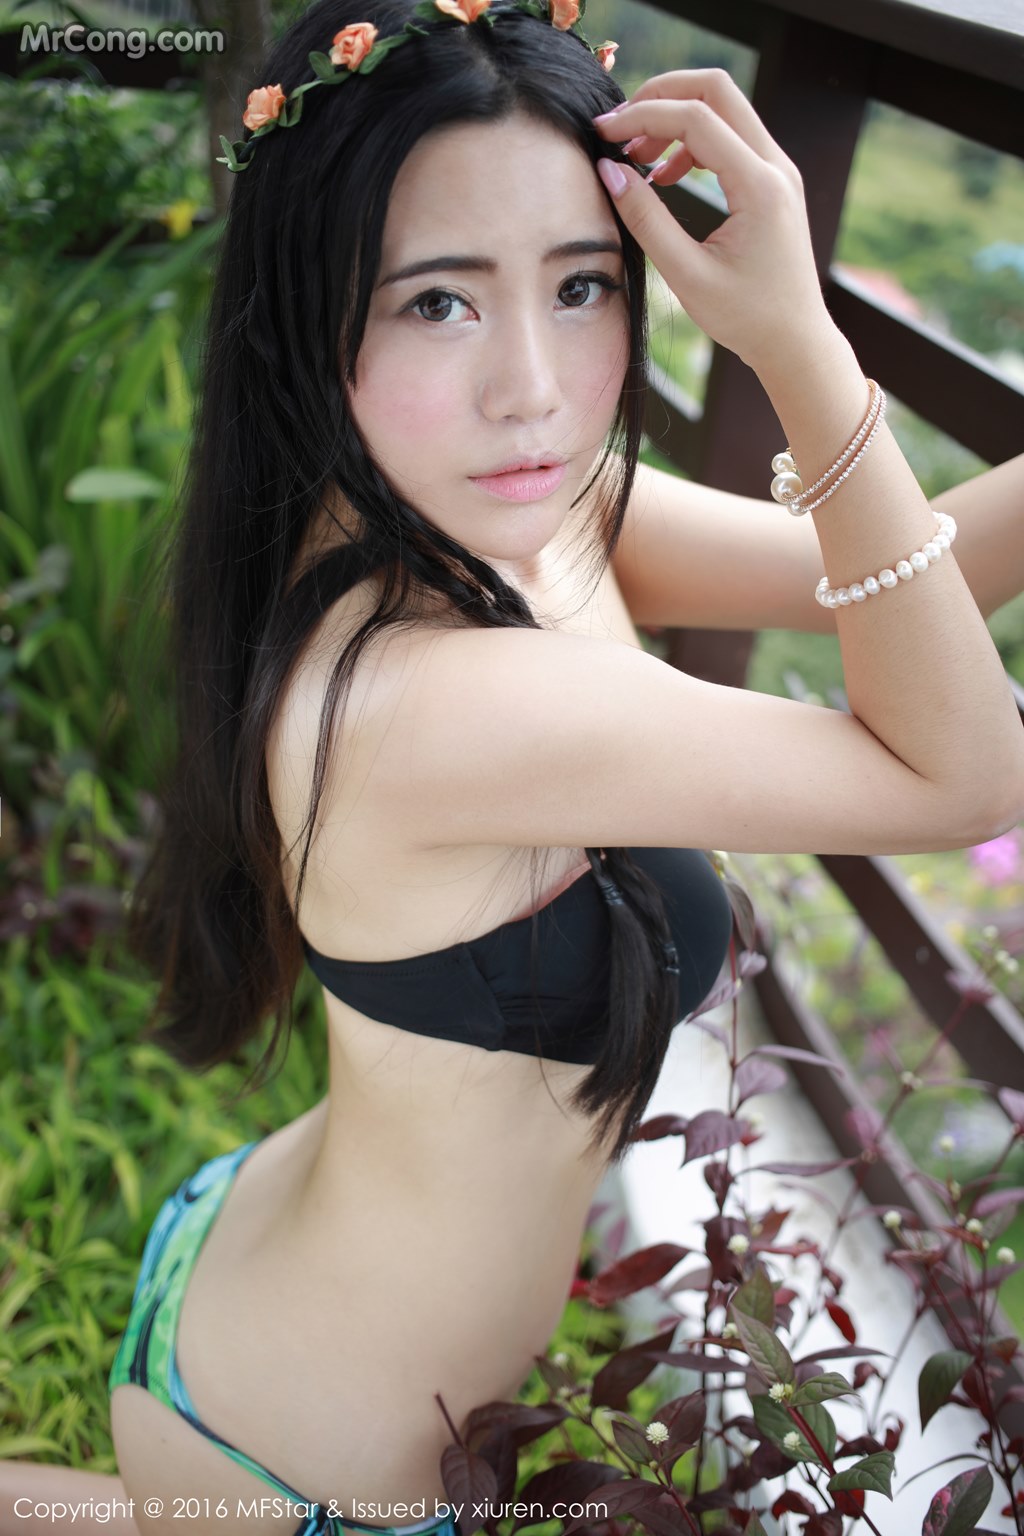 MFStar Vol.042: Model Youlina (兜 豆 靓) (51 photos)